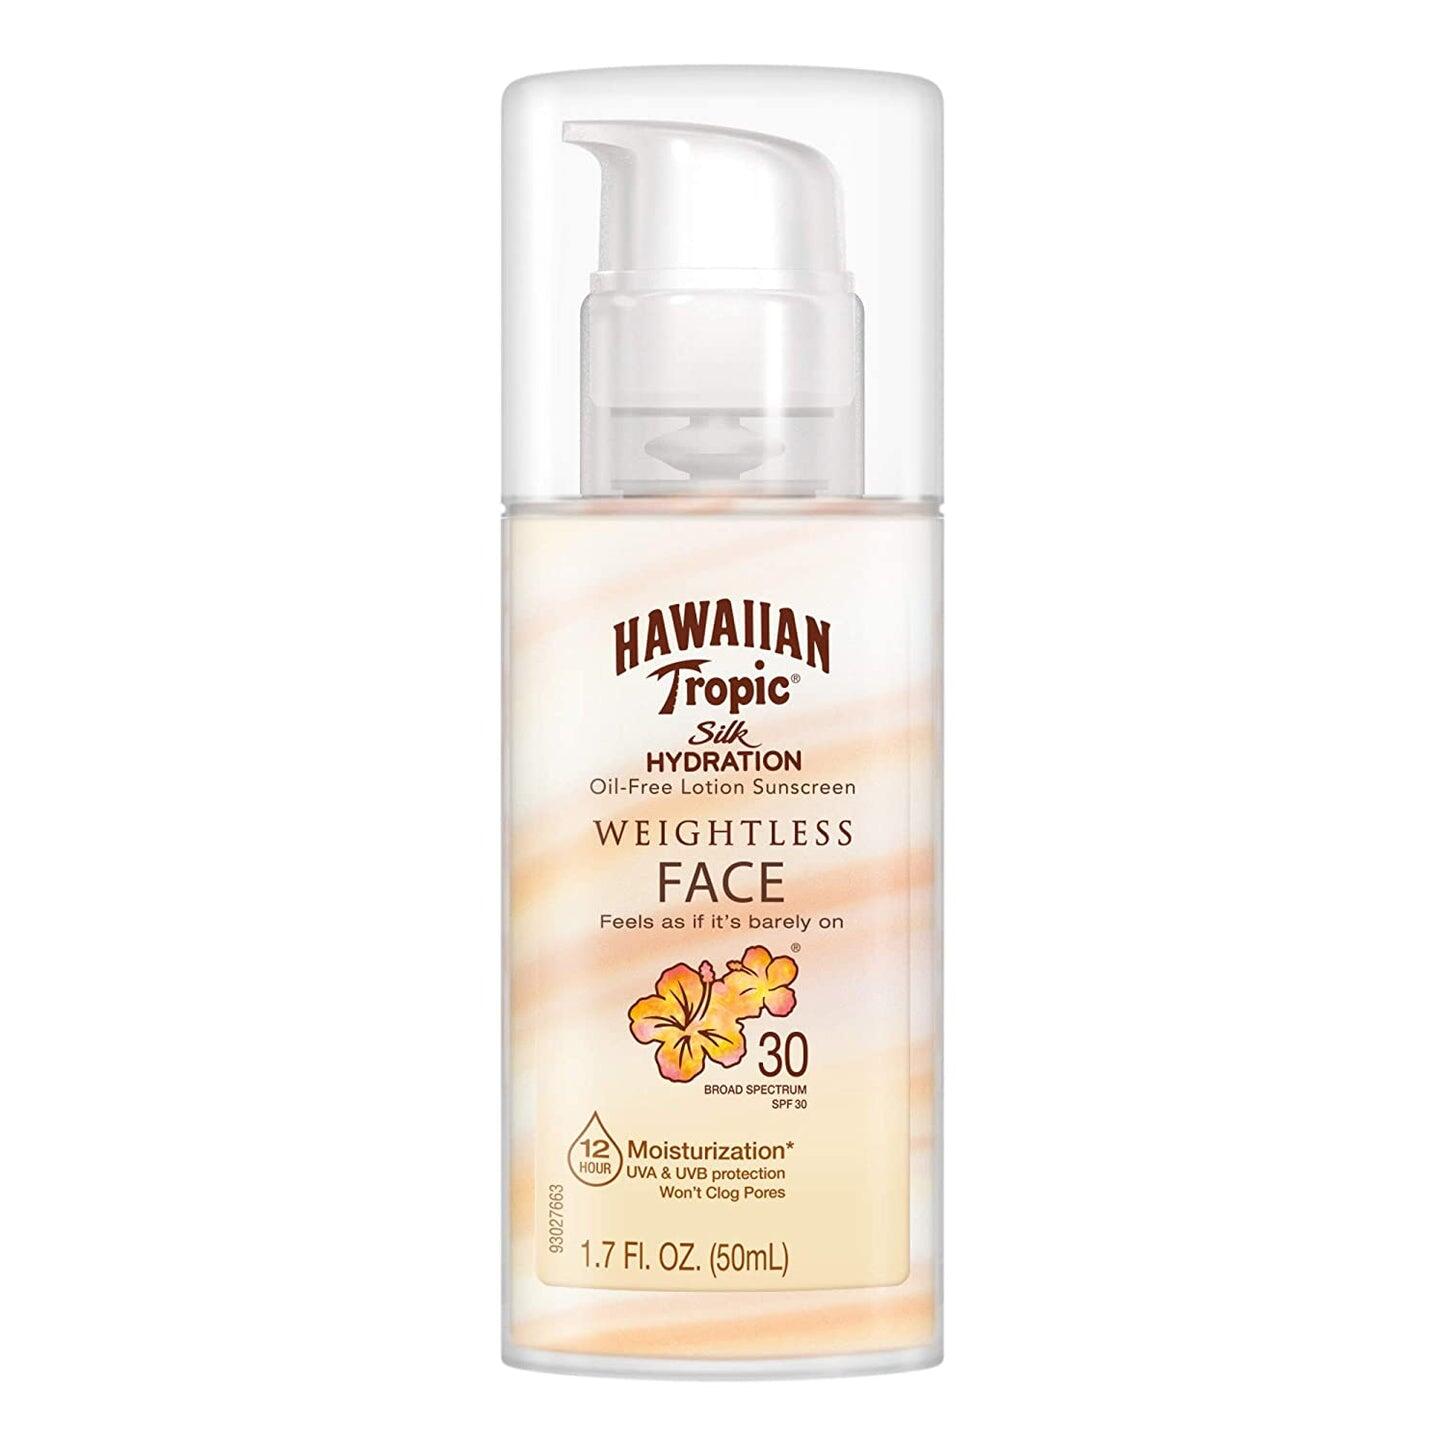 Hawaiian Tropic Silk Hydration Weightless Sunscreen Face Lotion SPF30